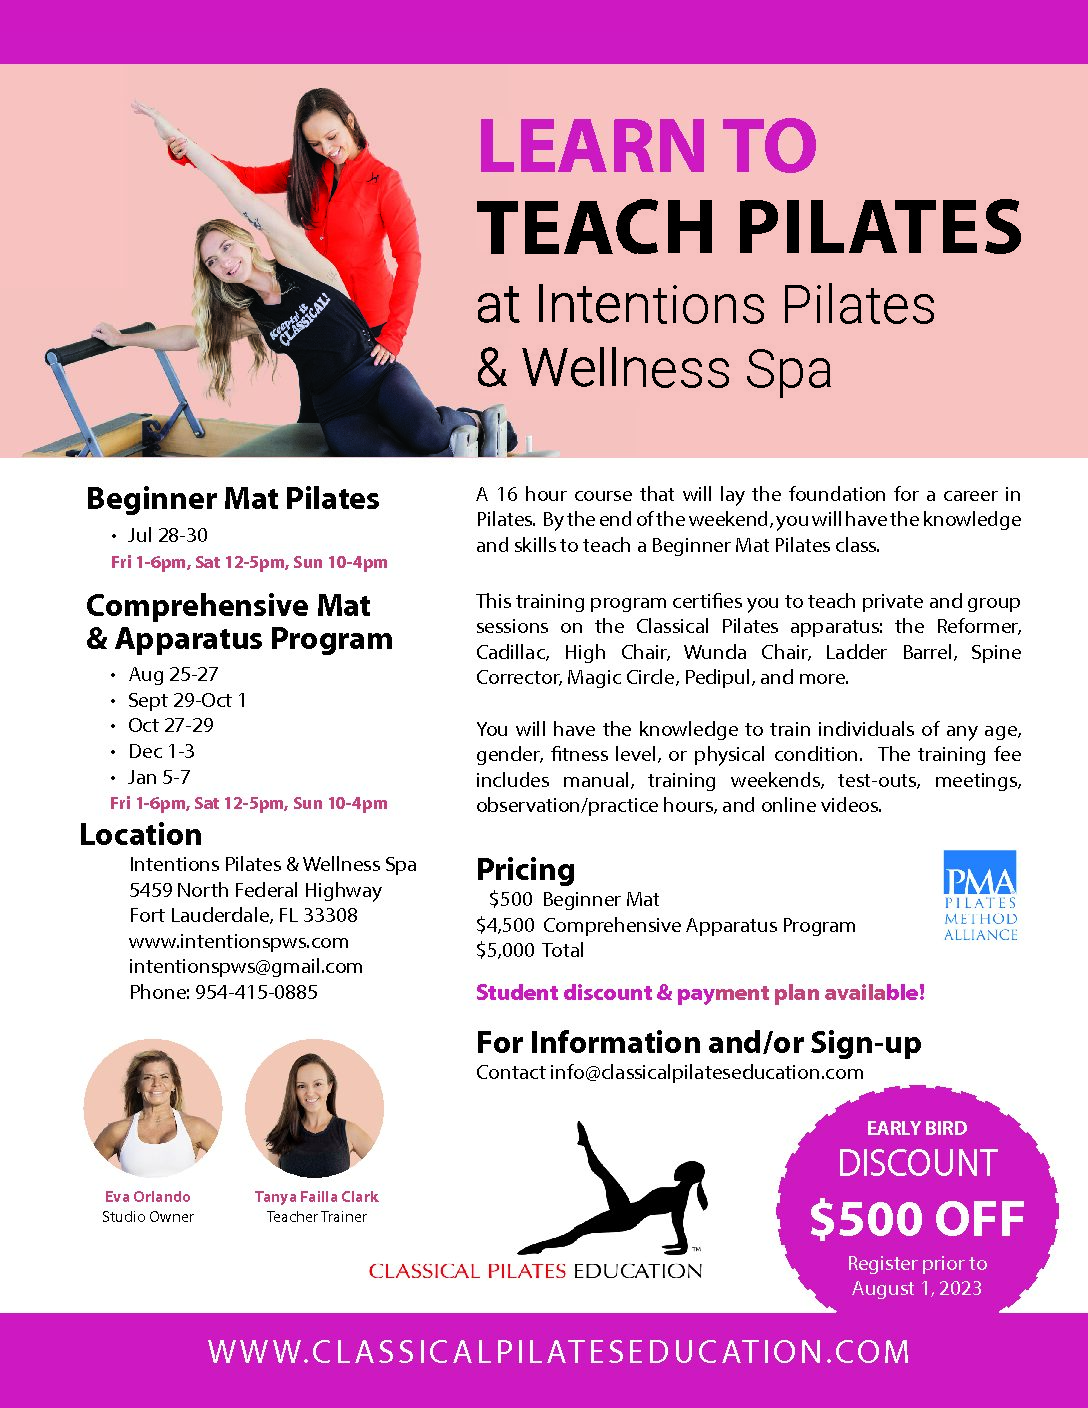 Intentions Pilates & Wellness Spa Fort Lauderdale, FL​